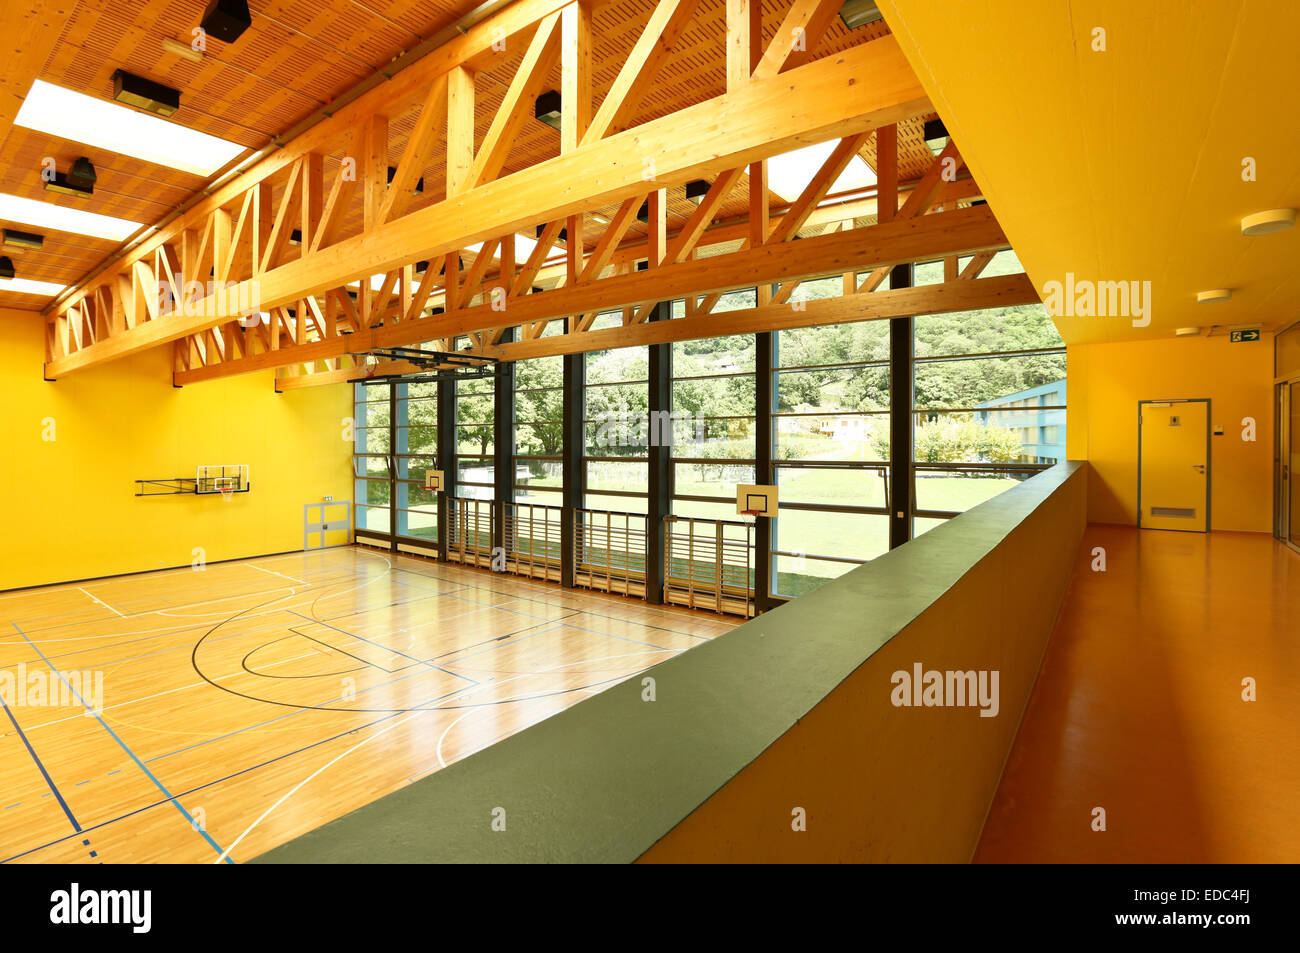 public school, interior wide gym Stock Photo